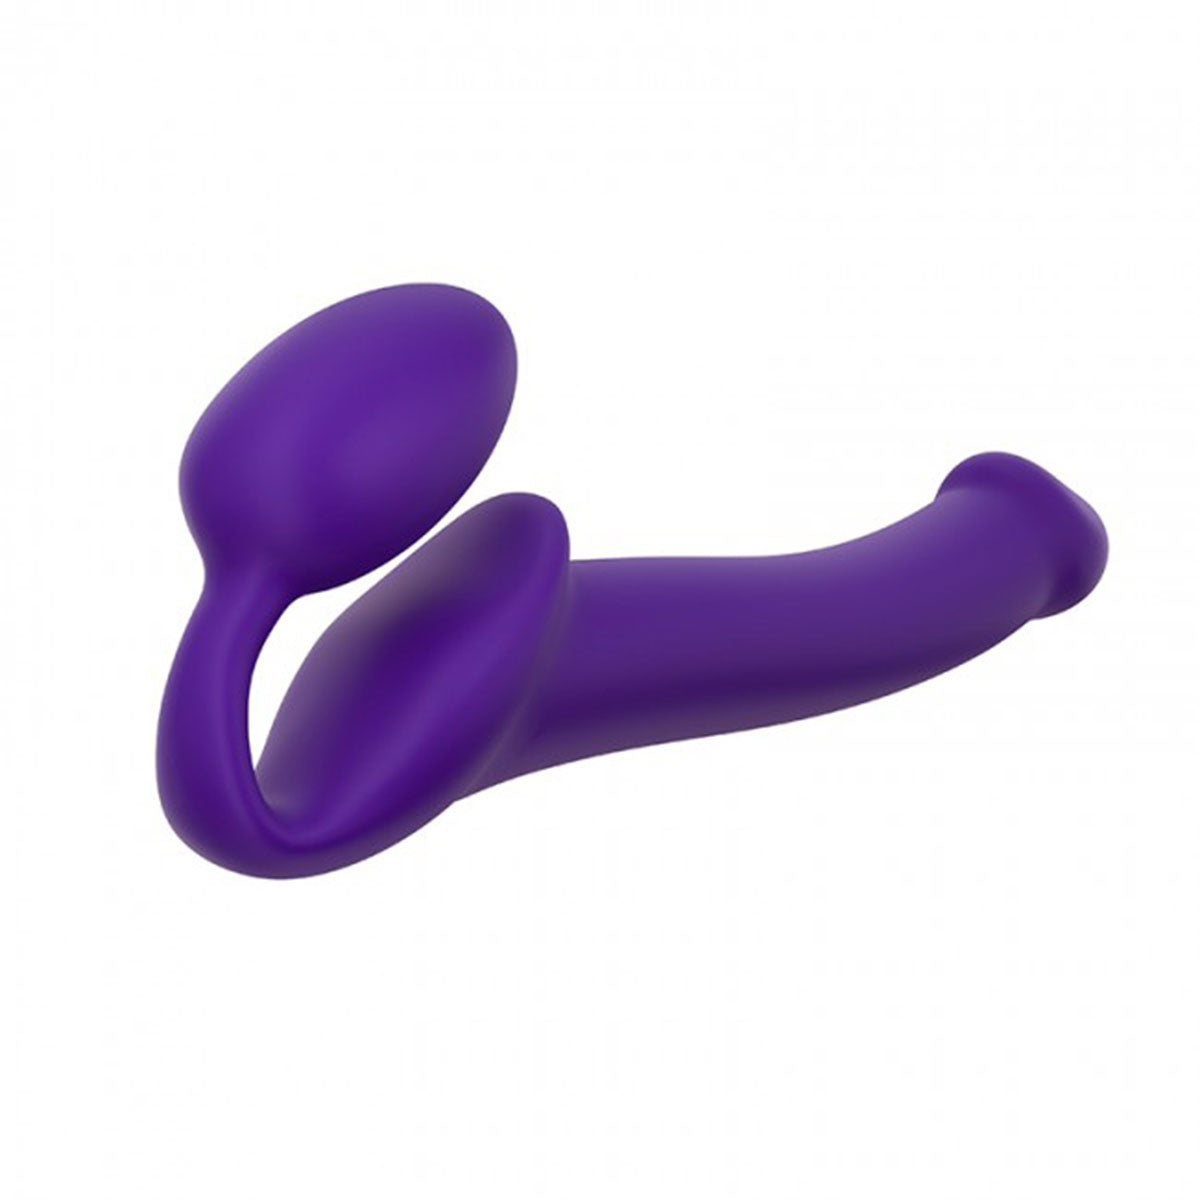 Strap-On-Me Purple Medium Intimates Adult Boutique